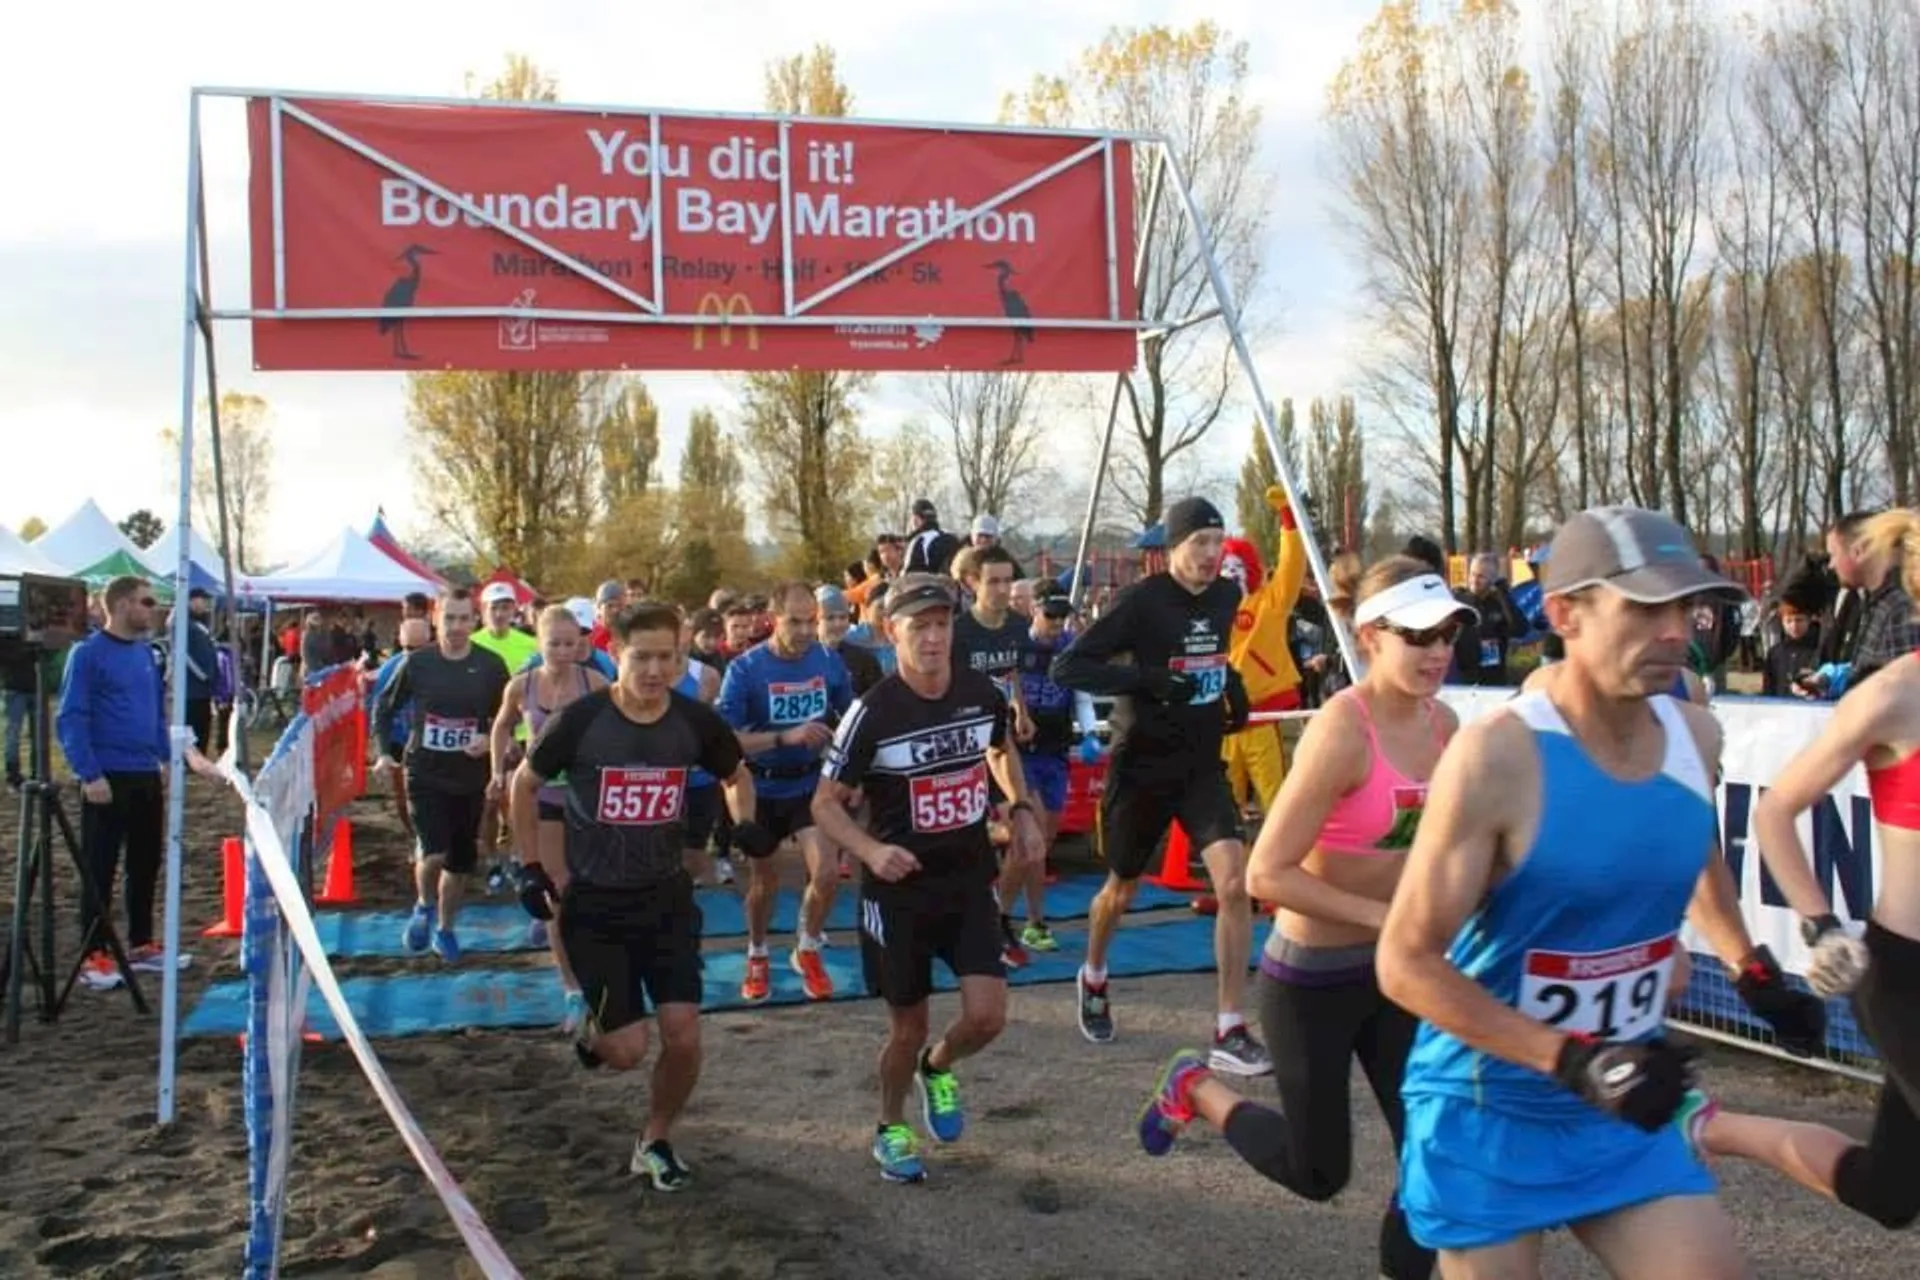 Boundary Bay Marathon